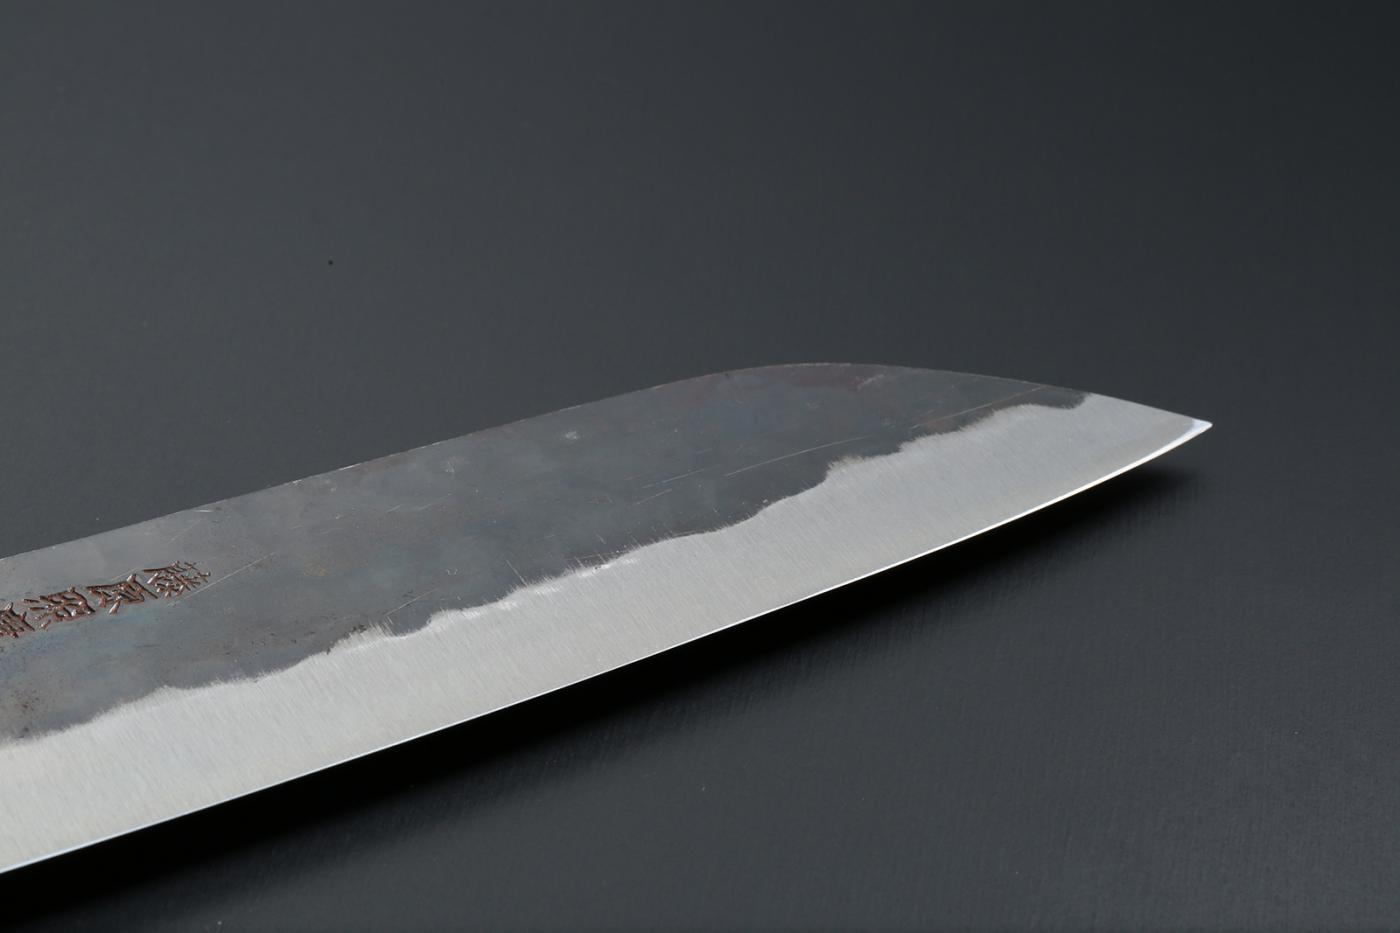 Santoku knife [Denka] + Octagonal handle with buffalo horn ferrule